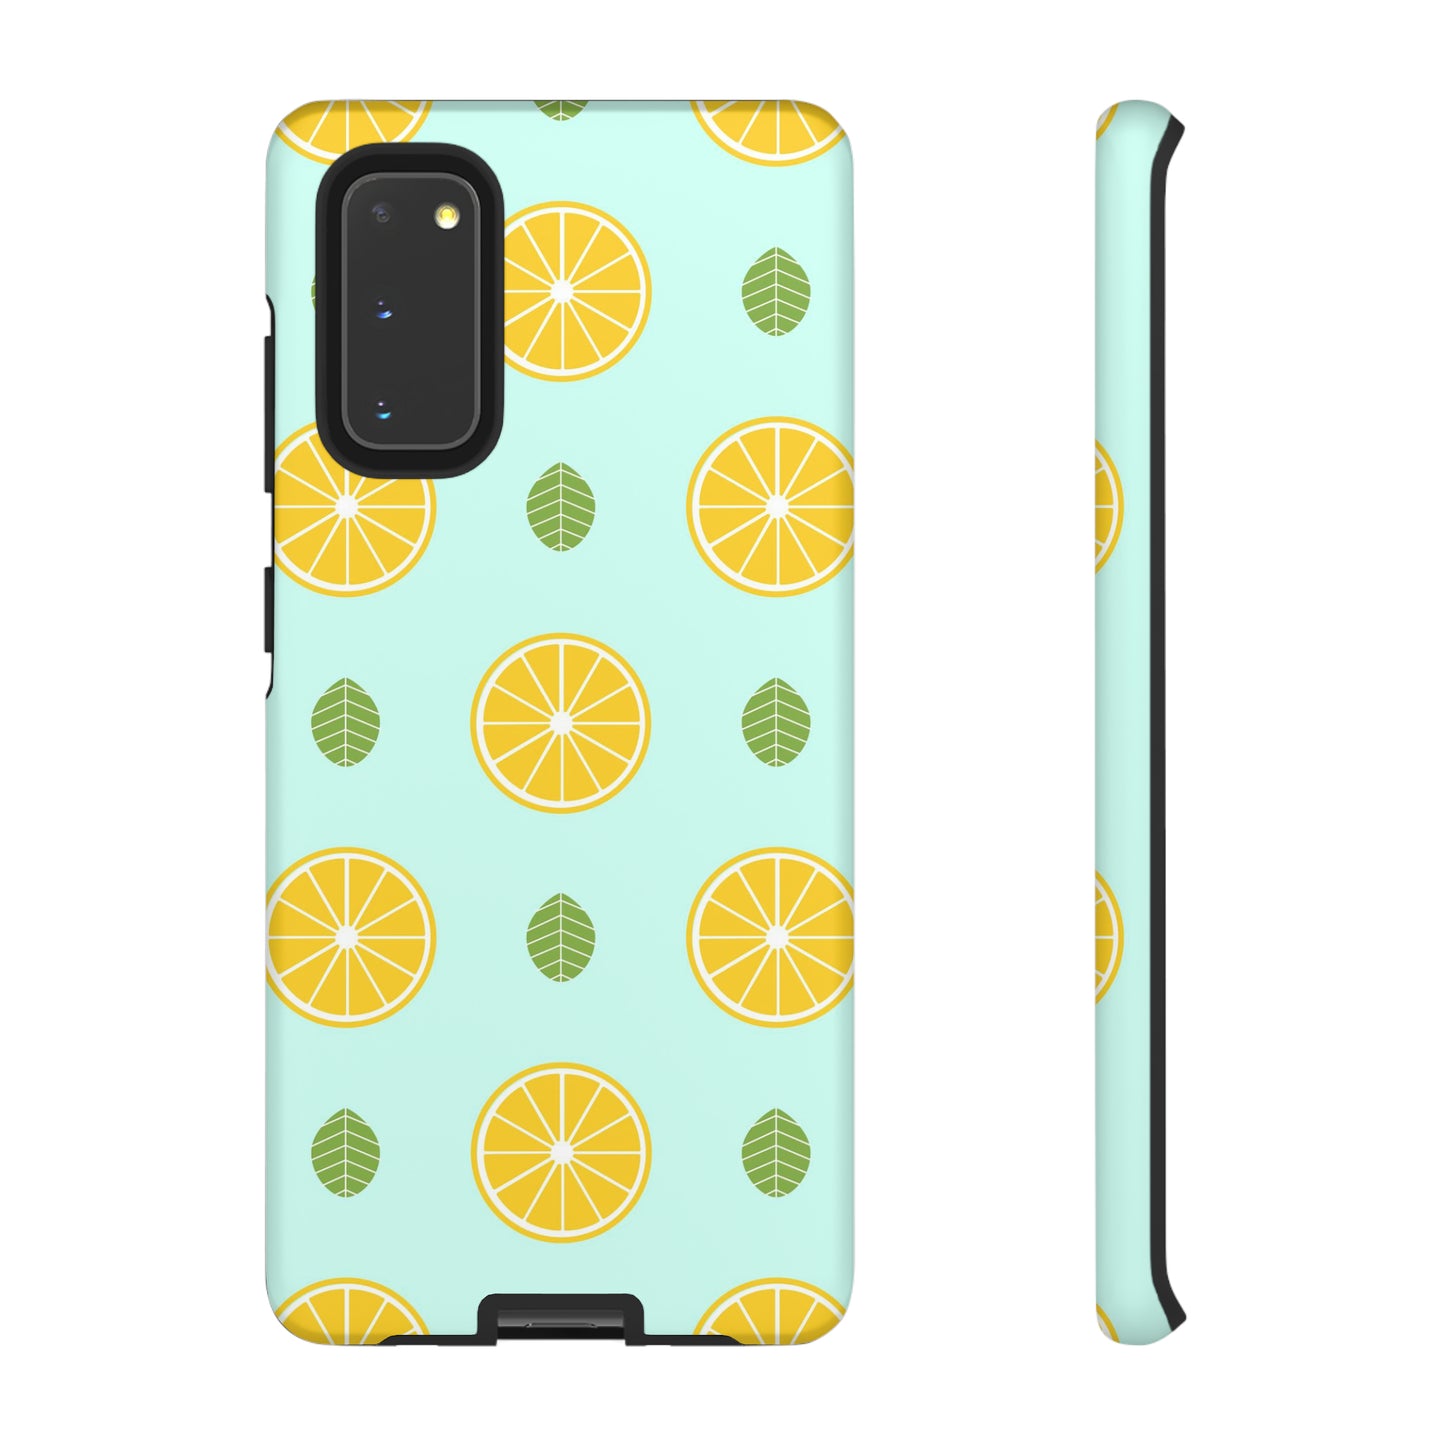 Lime Samsung case